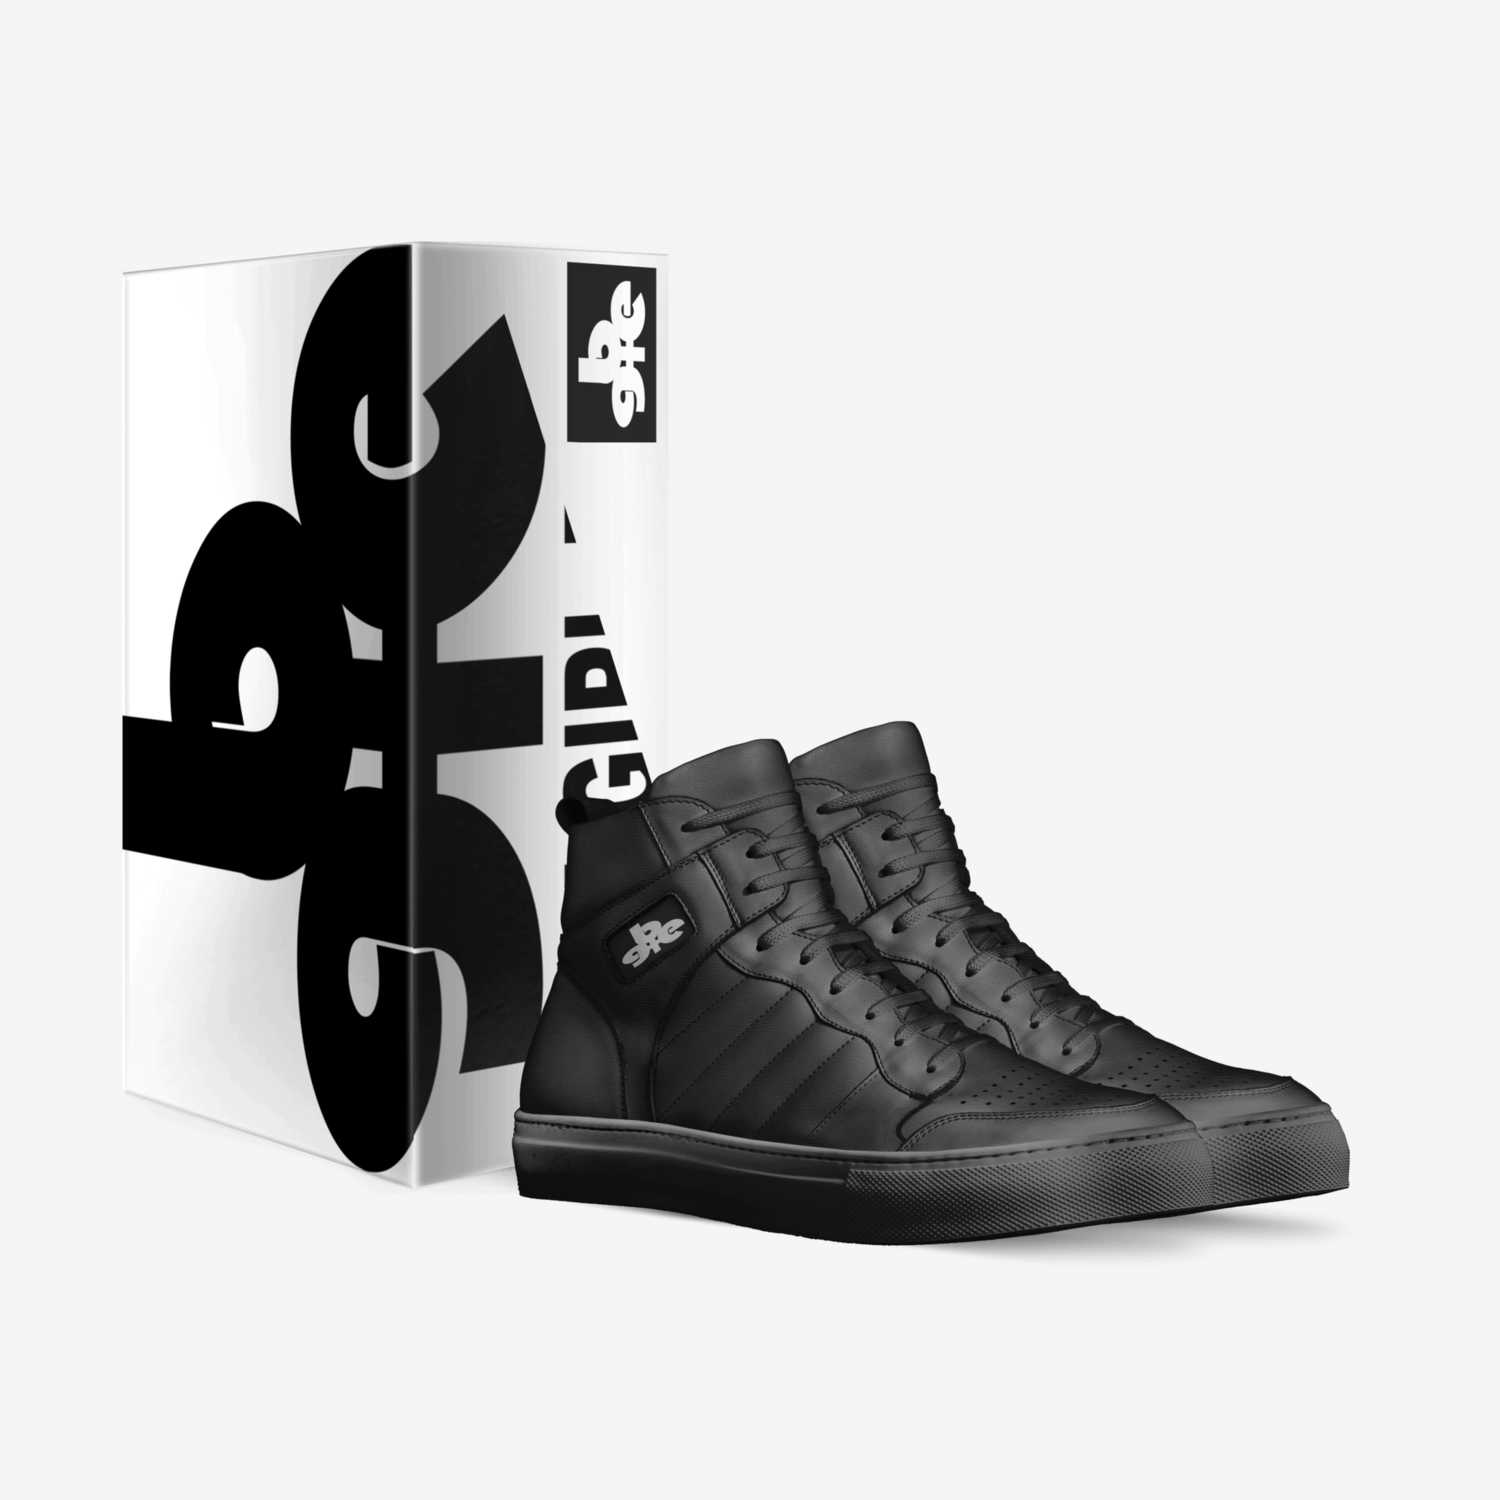 ALLBLACK SJ1 SALTO custom made in Italy shoes by Baby-girl Elite | Box view